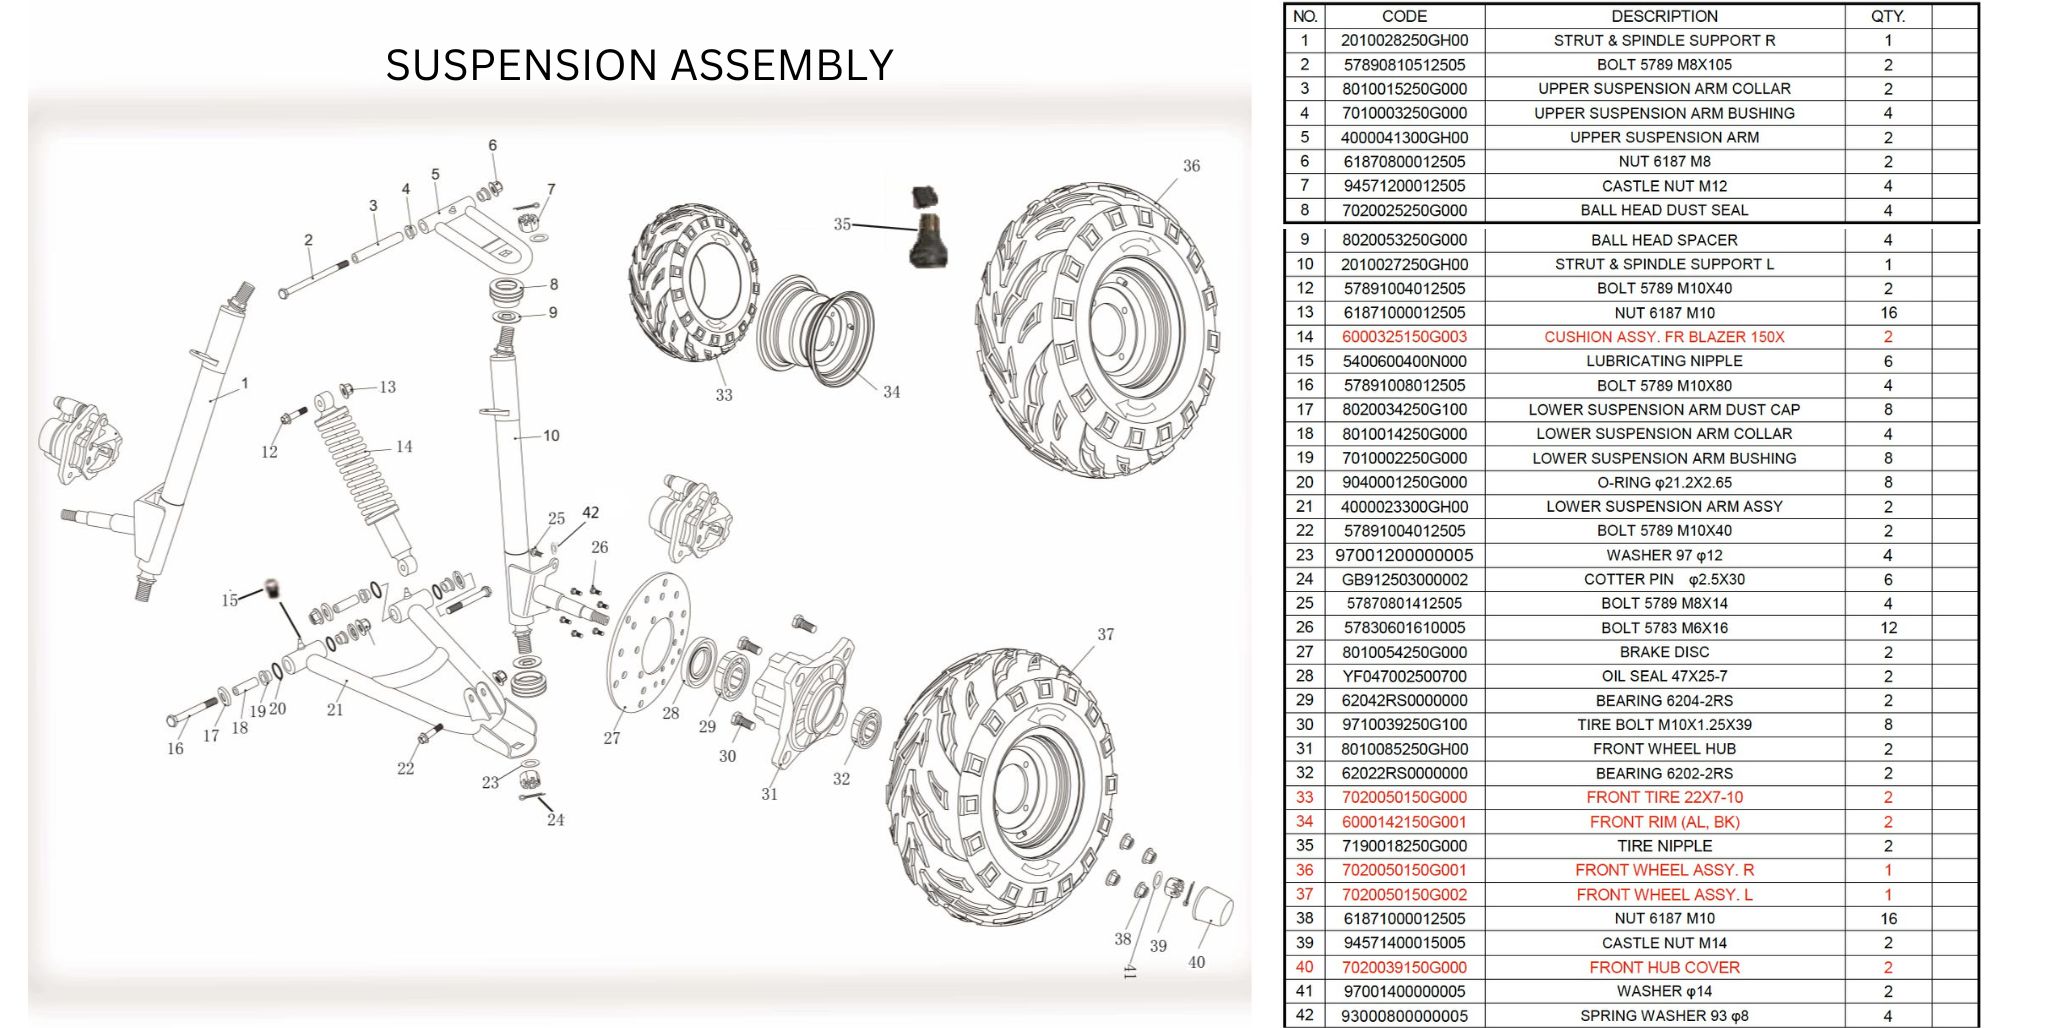 blazer200x-suspension-assembly.jpg